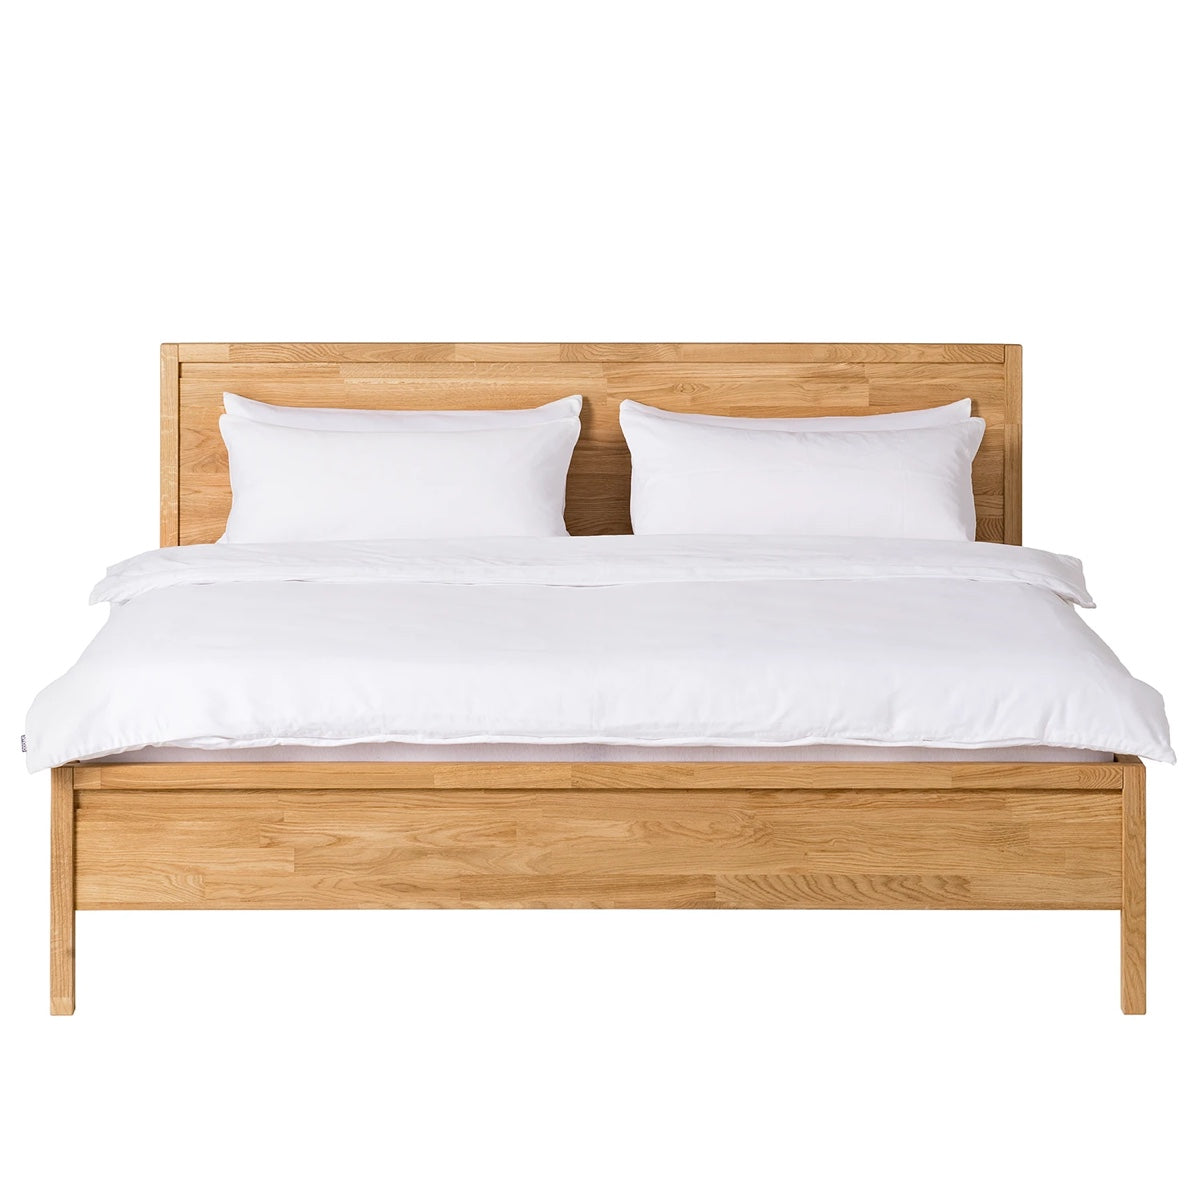 Wooden Bed Toronto